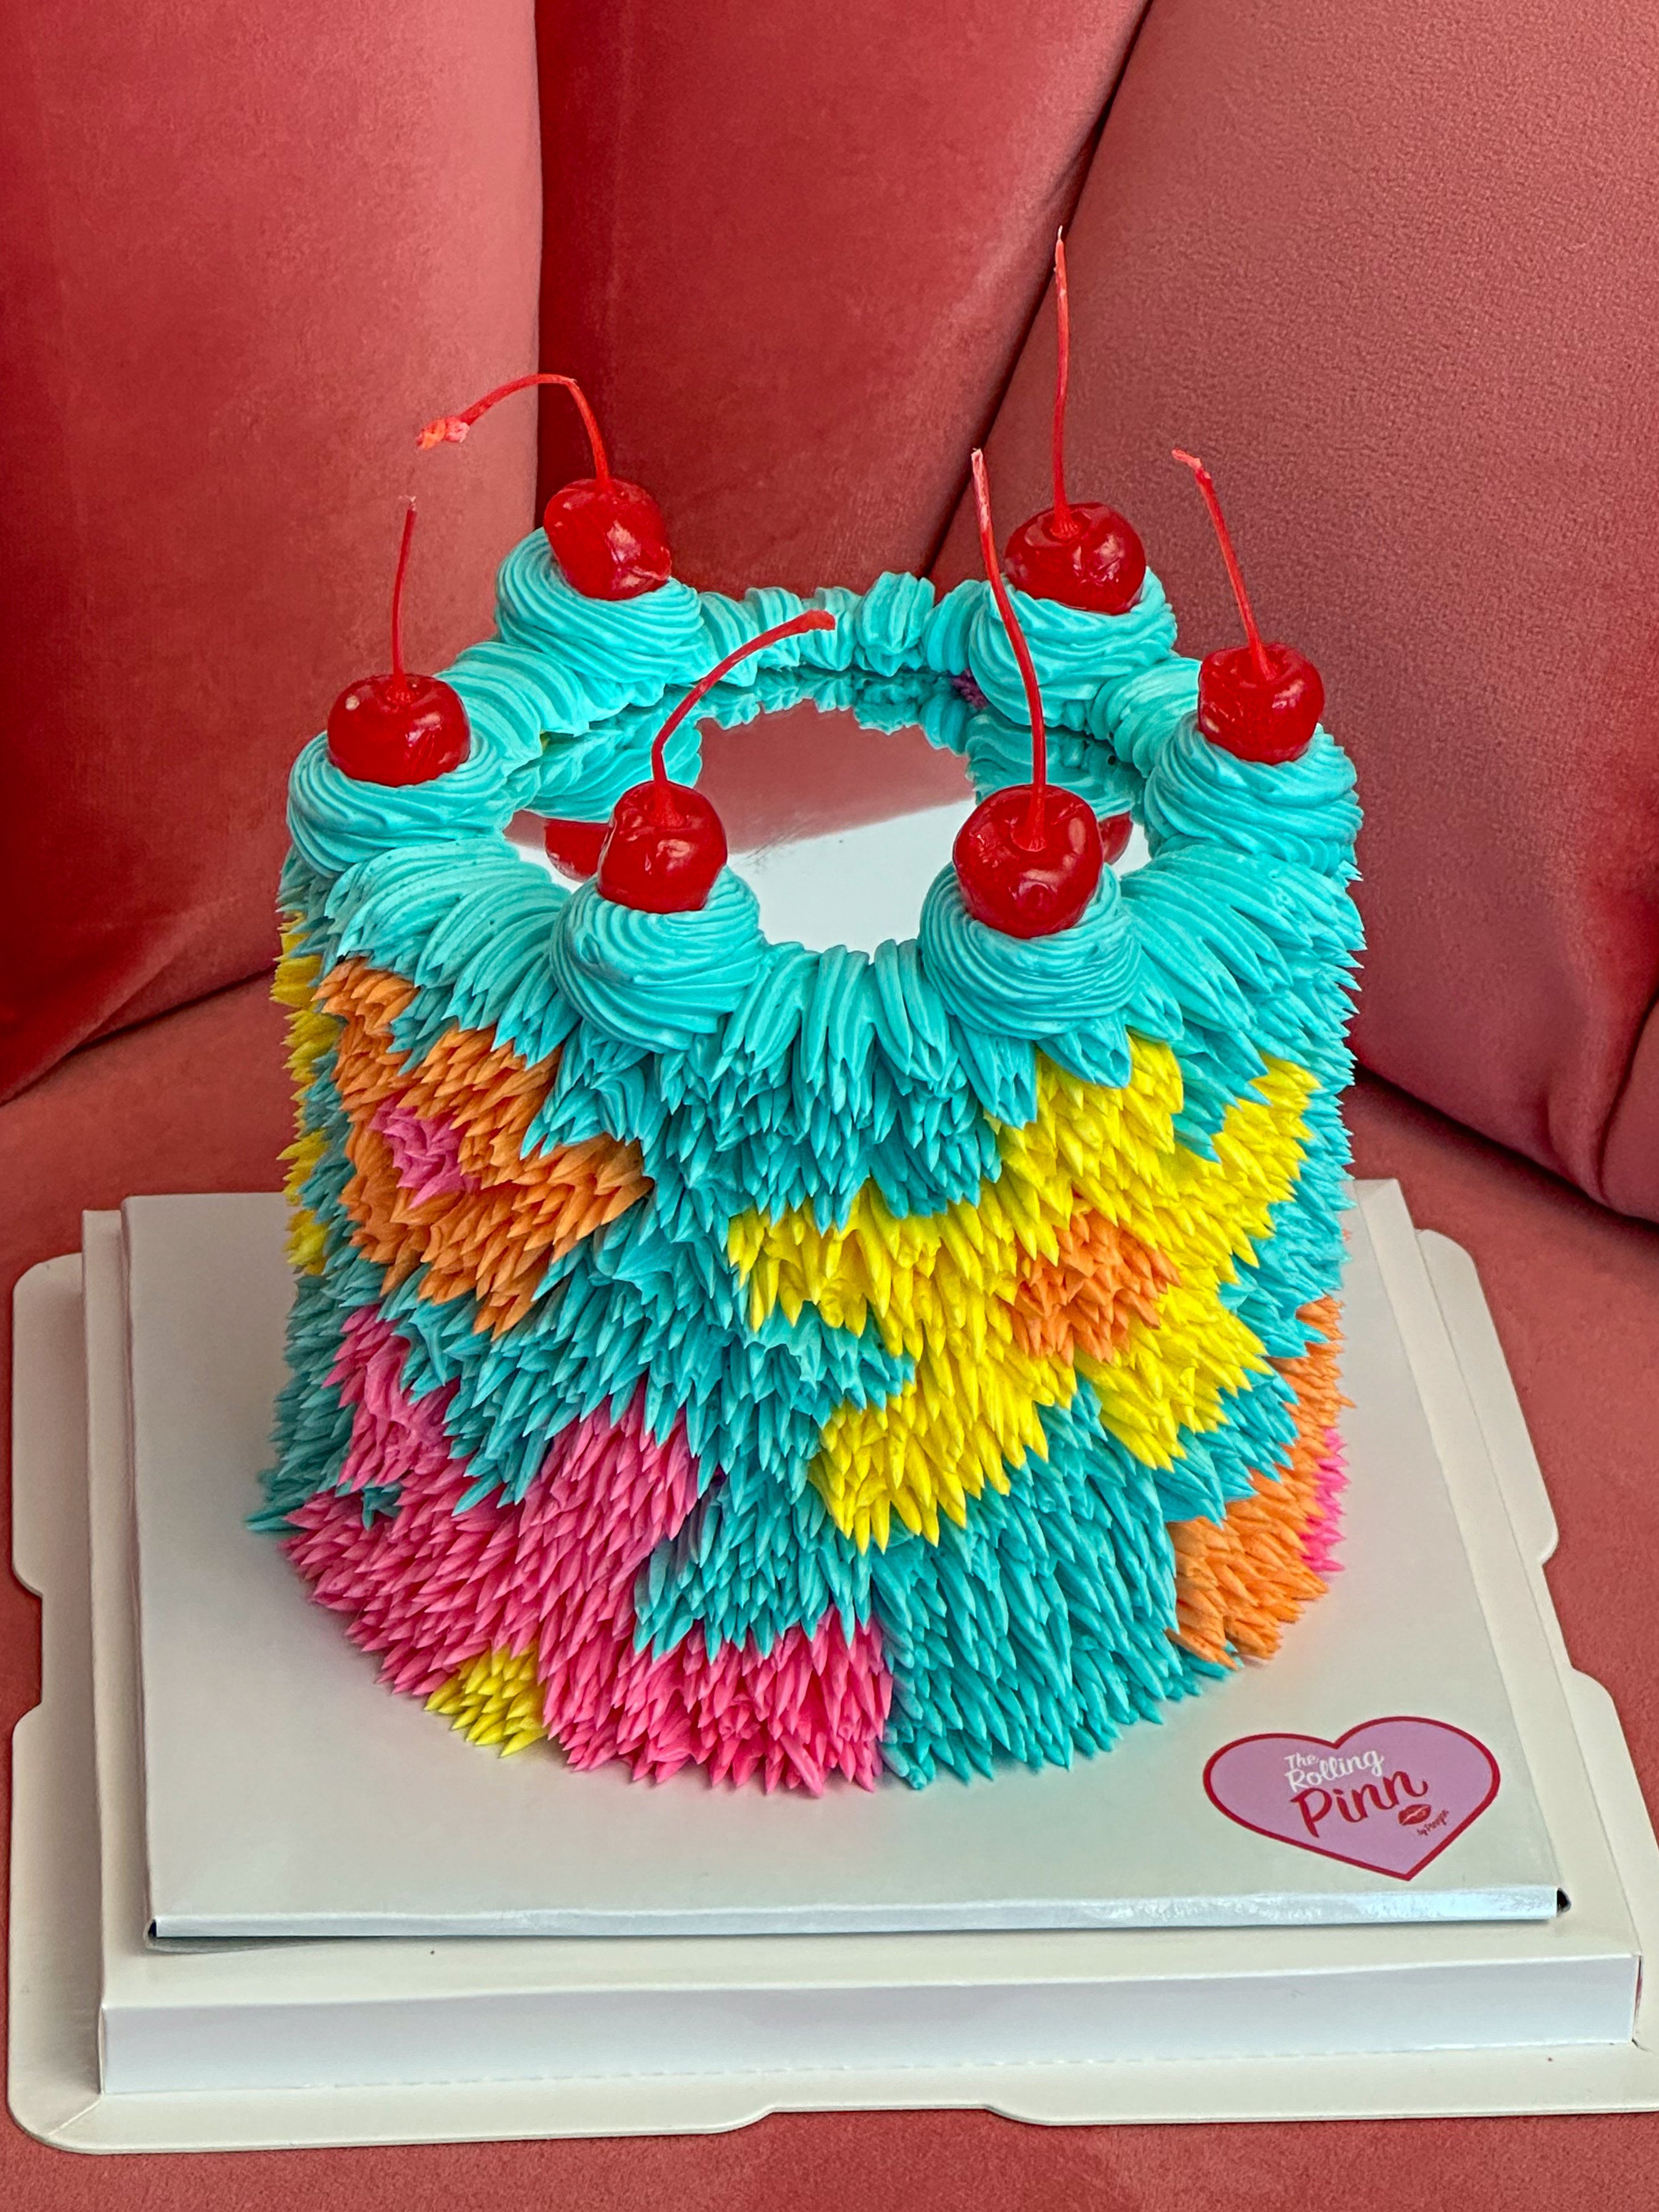 Selfie queen cake #cakeofinstagram #cakeideas #annasconfectionary  #bahraincakesmaker #bahraincakeshop #bahraincakesonline #cake… | Instagram